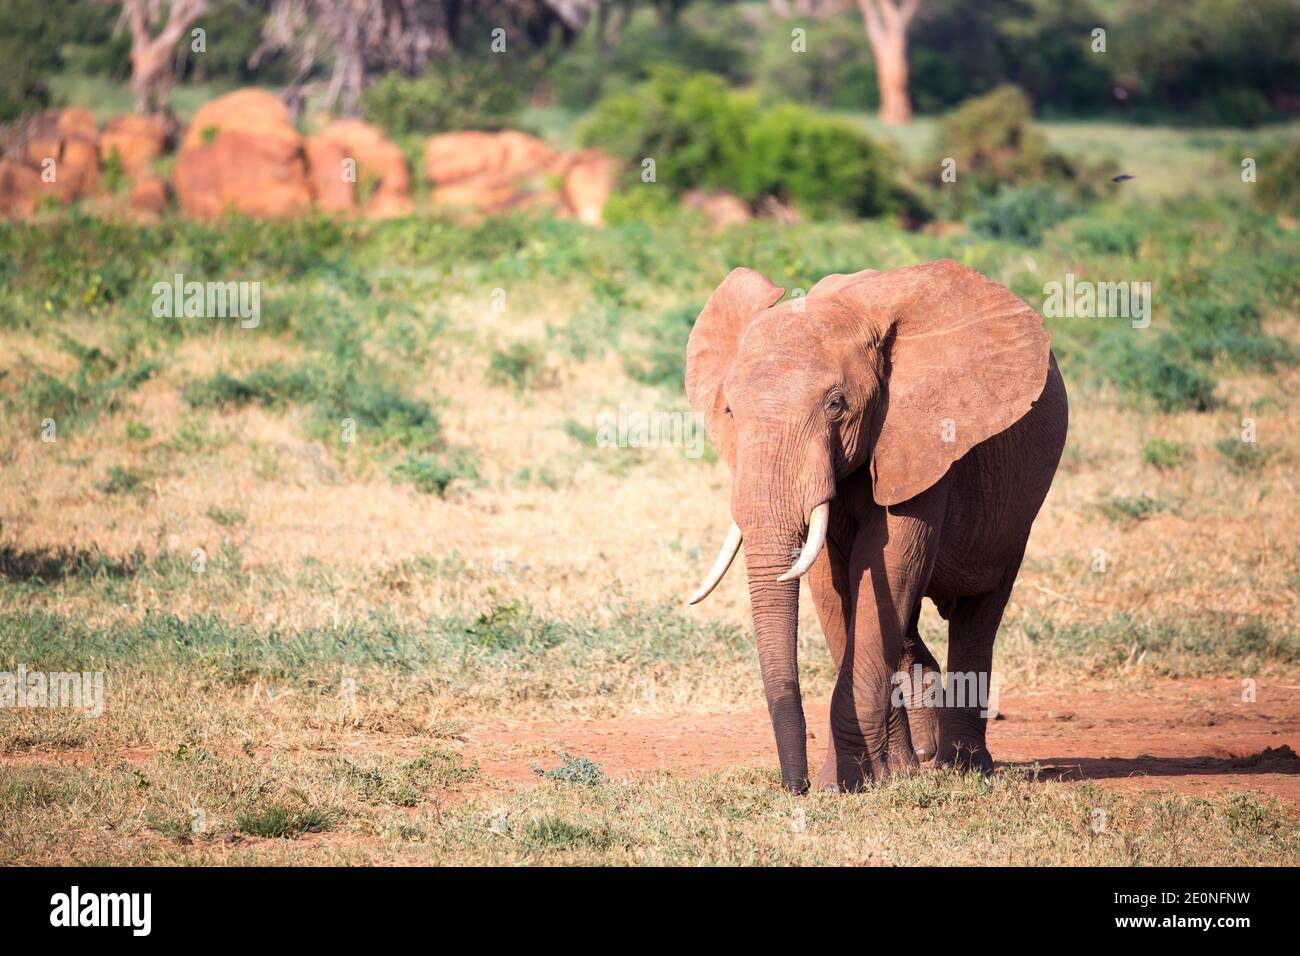 One big red elephant walks through the savannah between many plants. Stock Photo